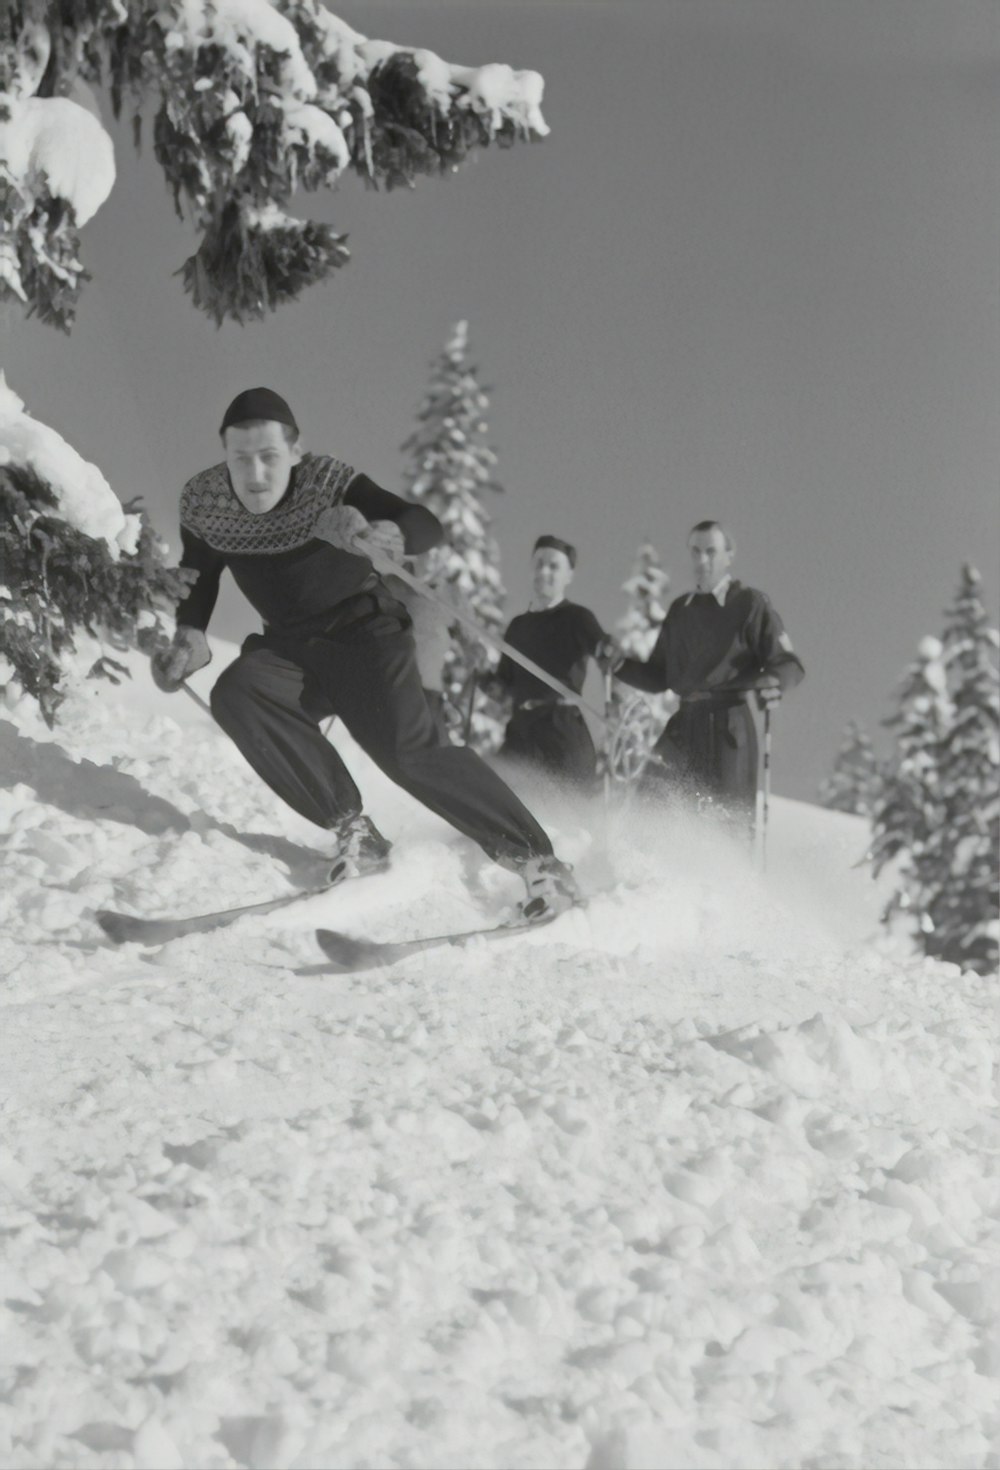 grayscale photography of people doing nordic skiing